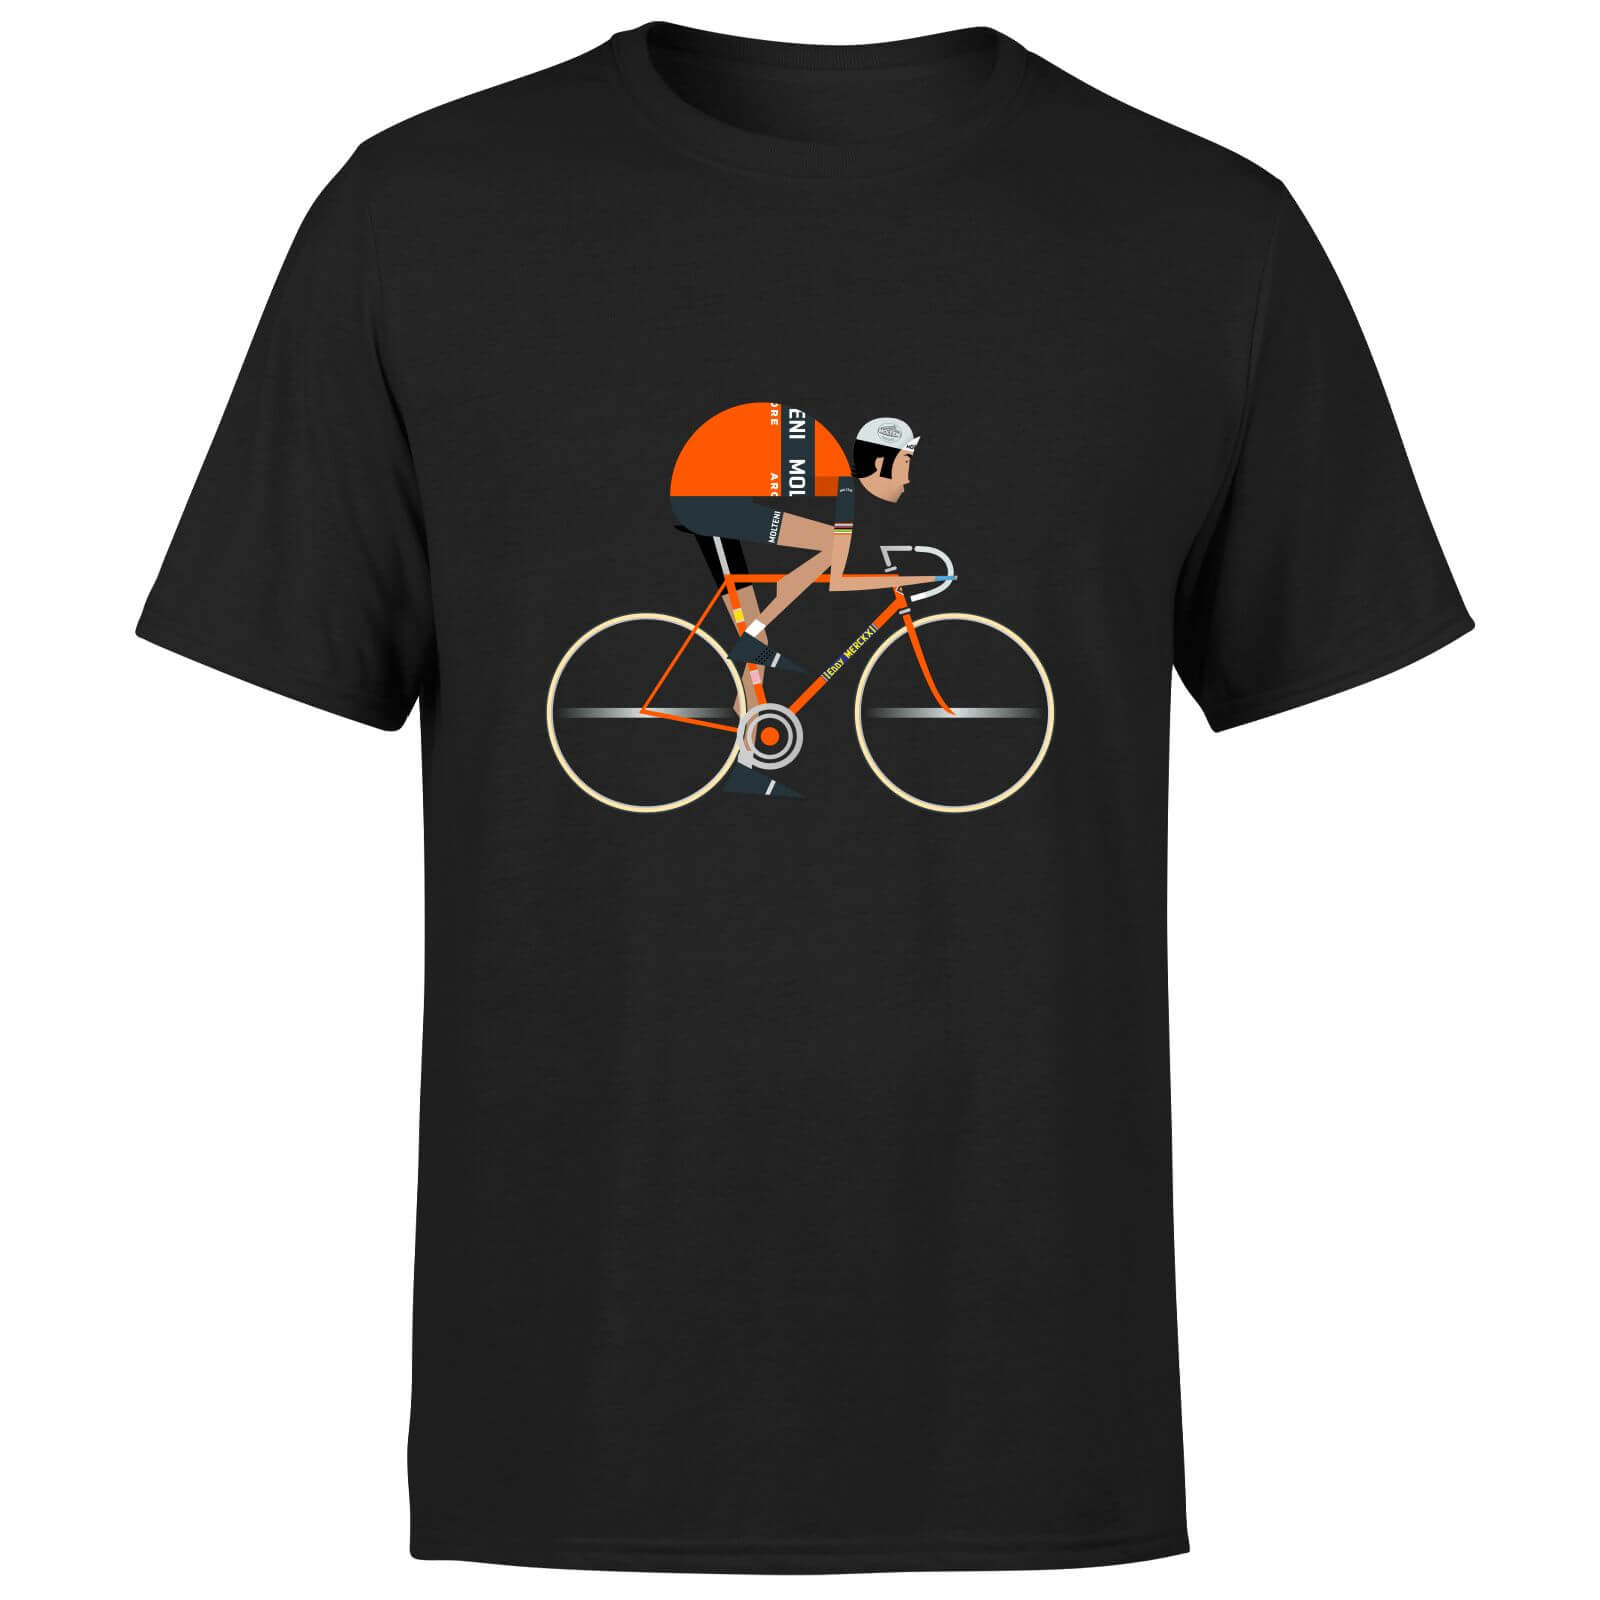 Little James Arnold Eddy Merckx Men's T-Shirt - Black - M - Black